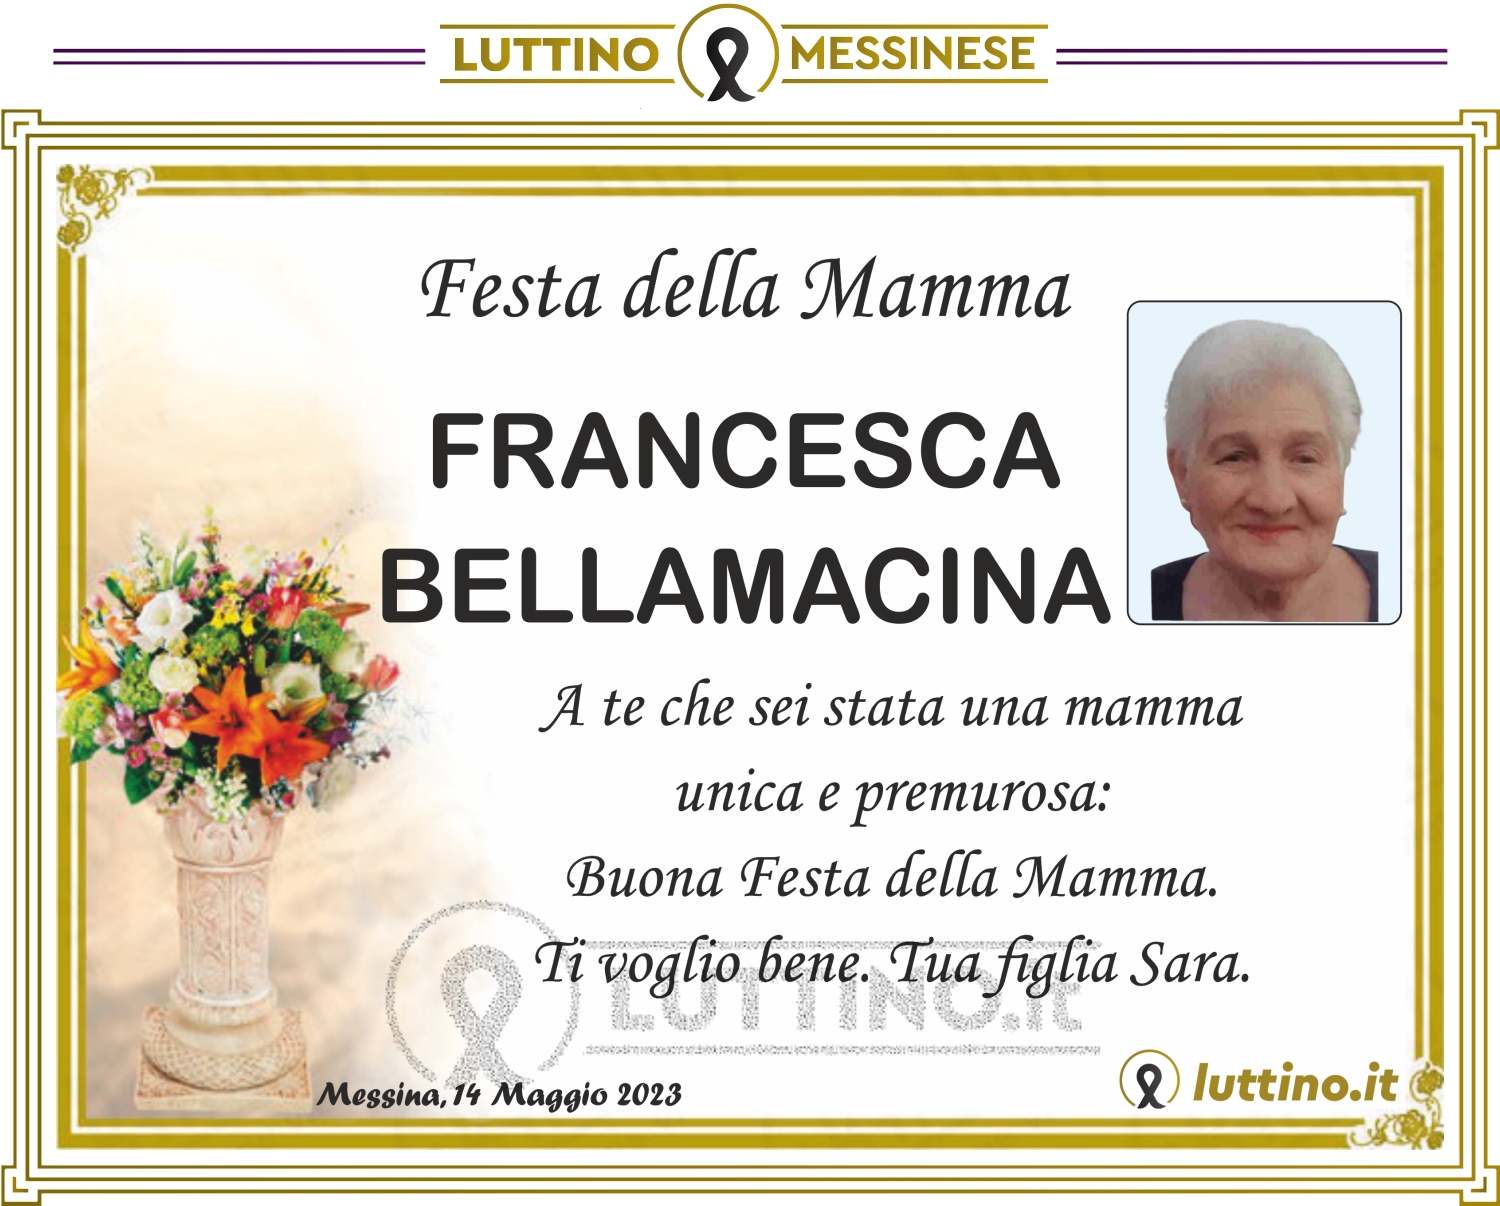 Francesca Bellamacina